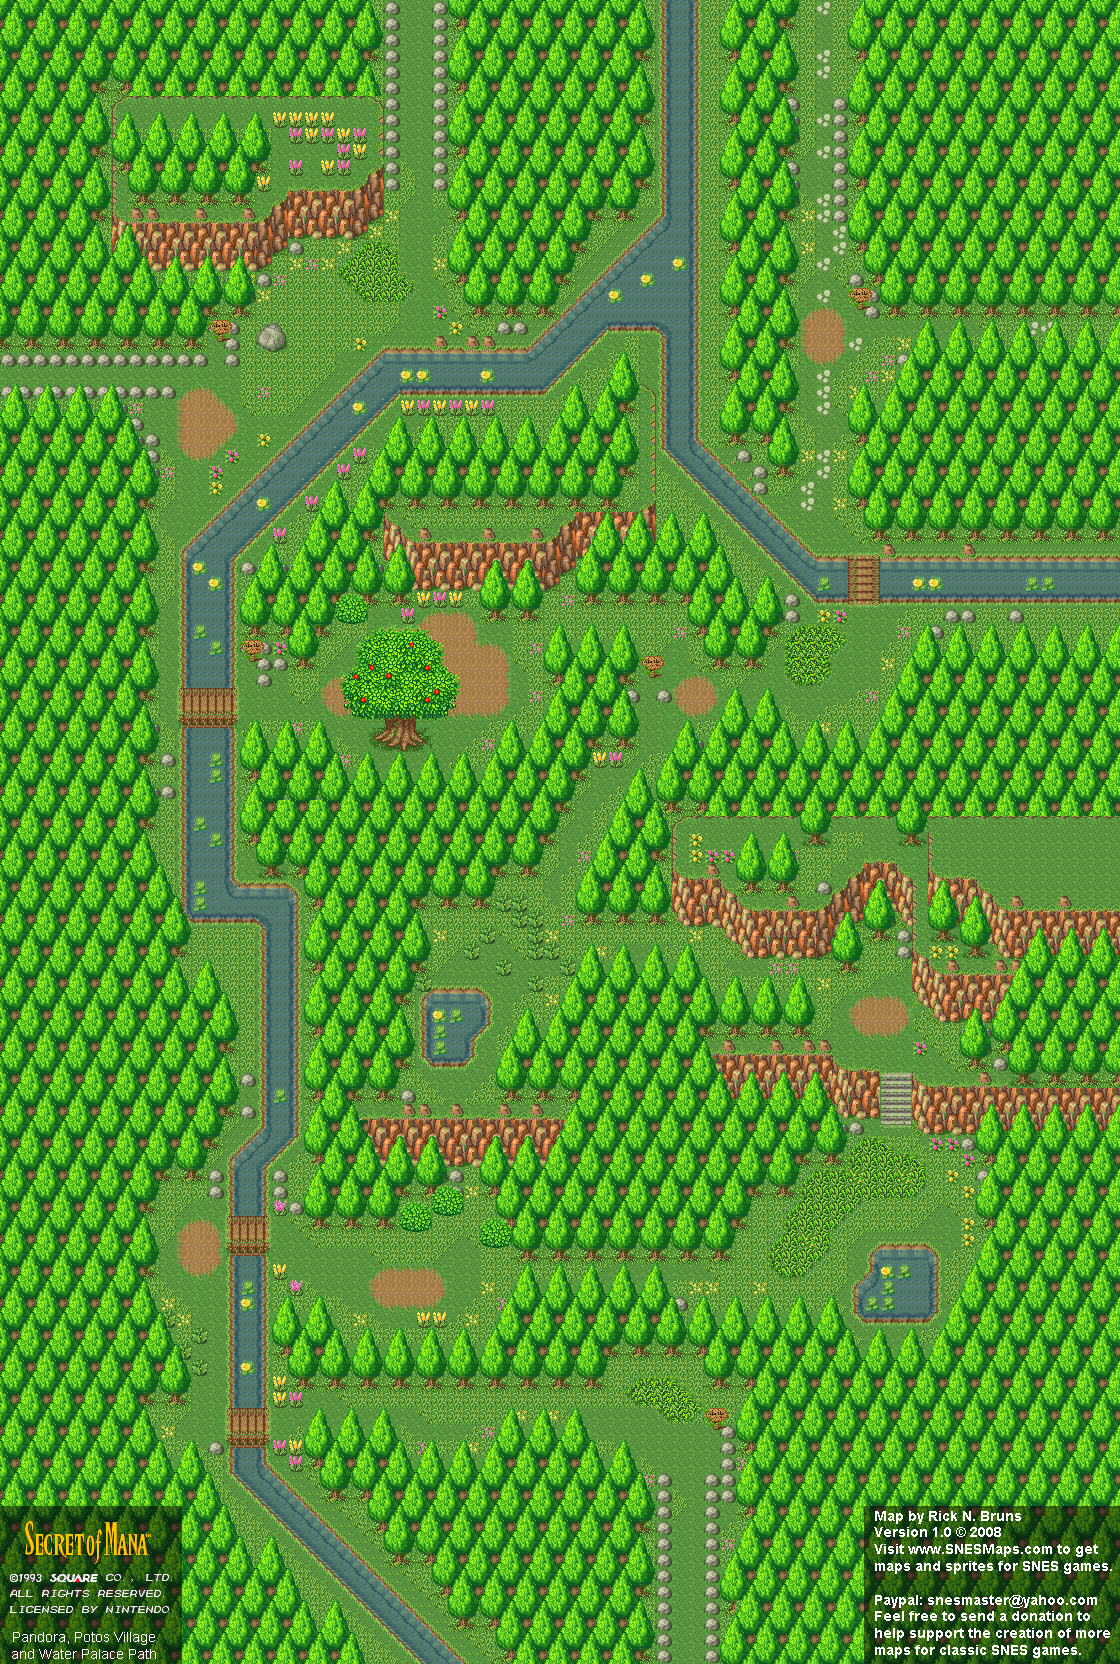 Secret of Mana - Pandora, Potos Village, Water Palace Path - Super Nintendo SNES Background Map